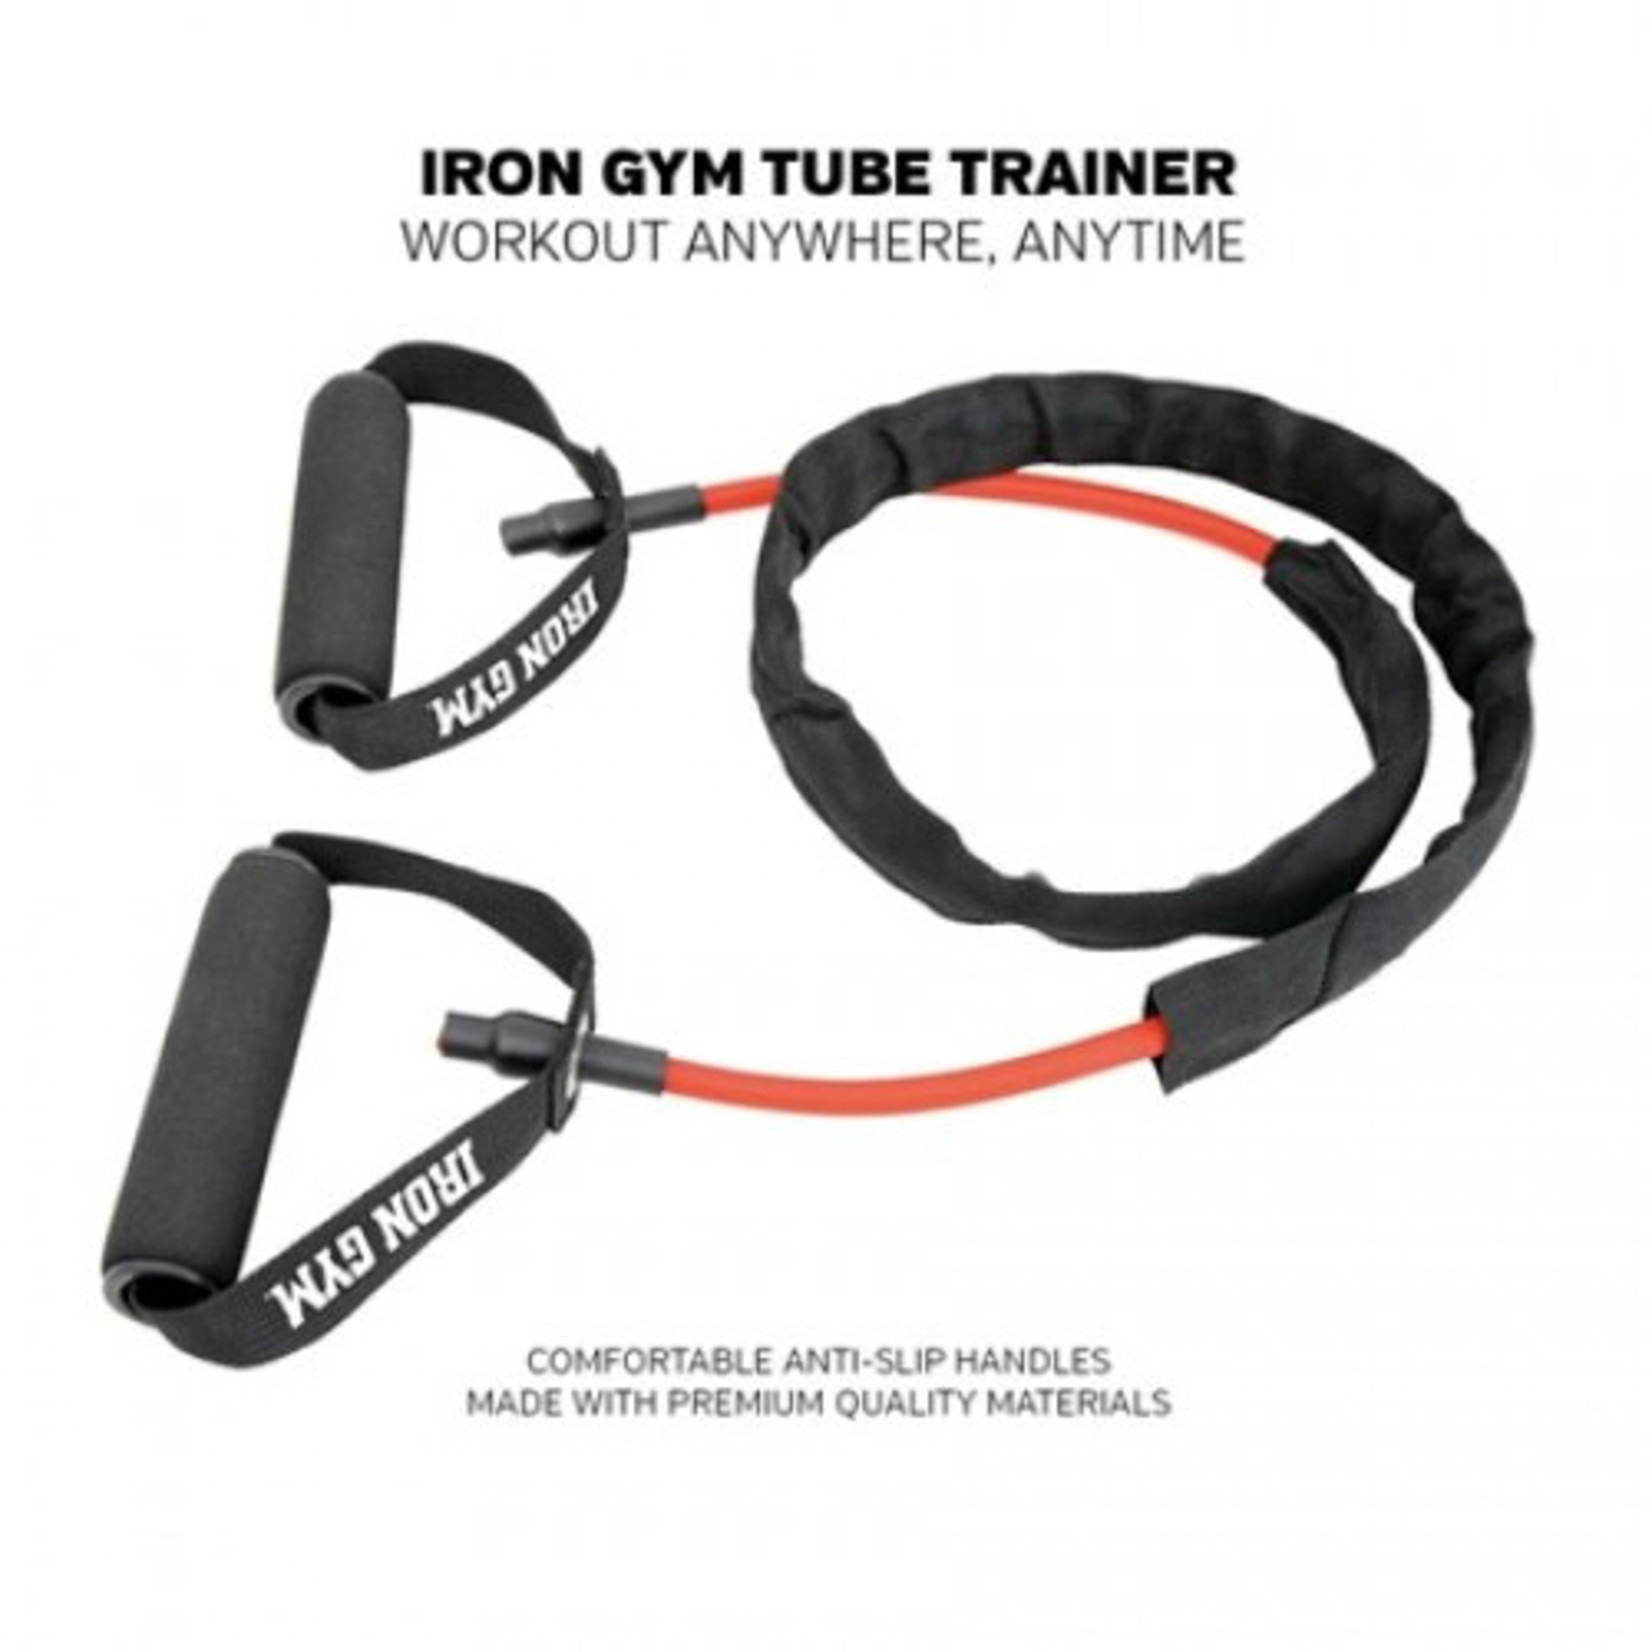 Iron Gym Tube Trainer IRG041 Iron Gym